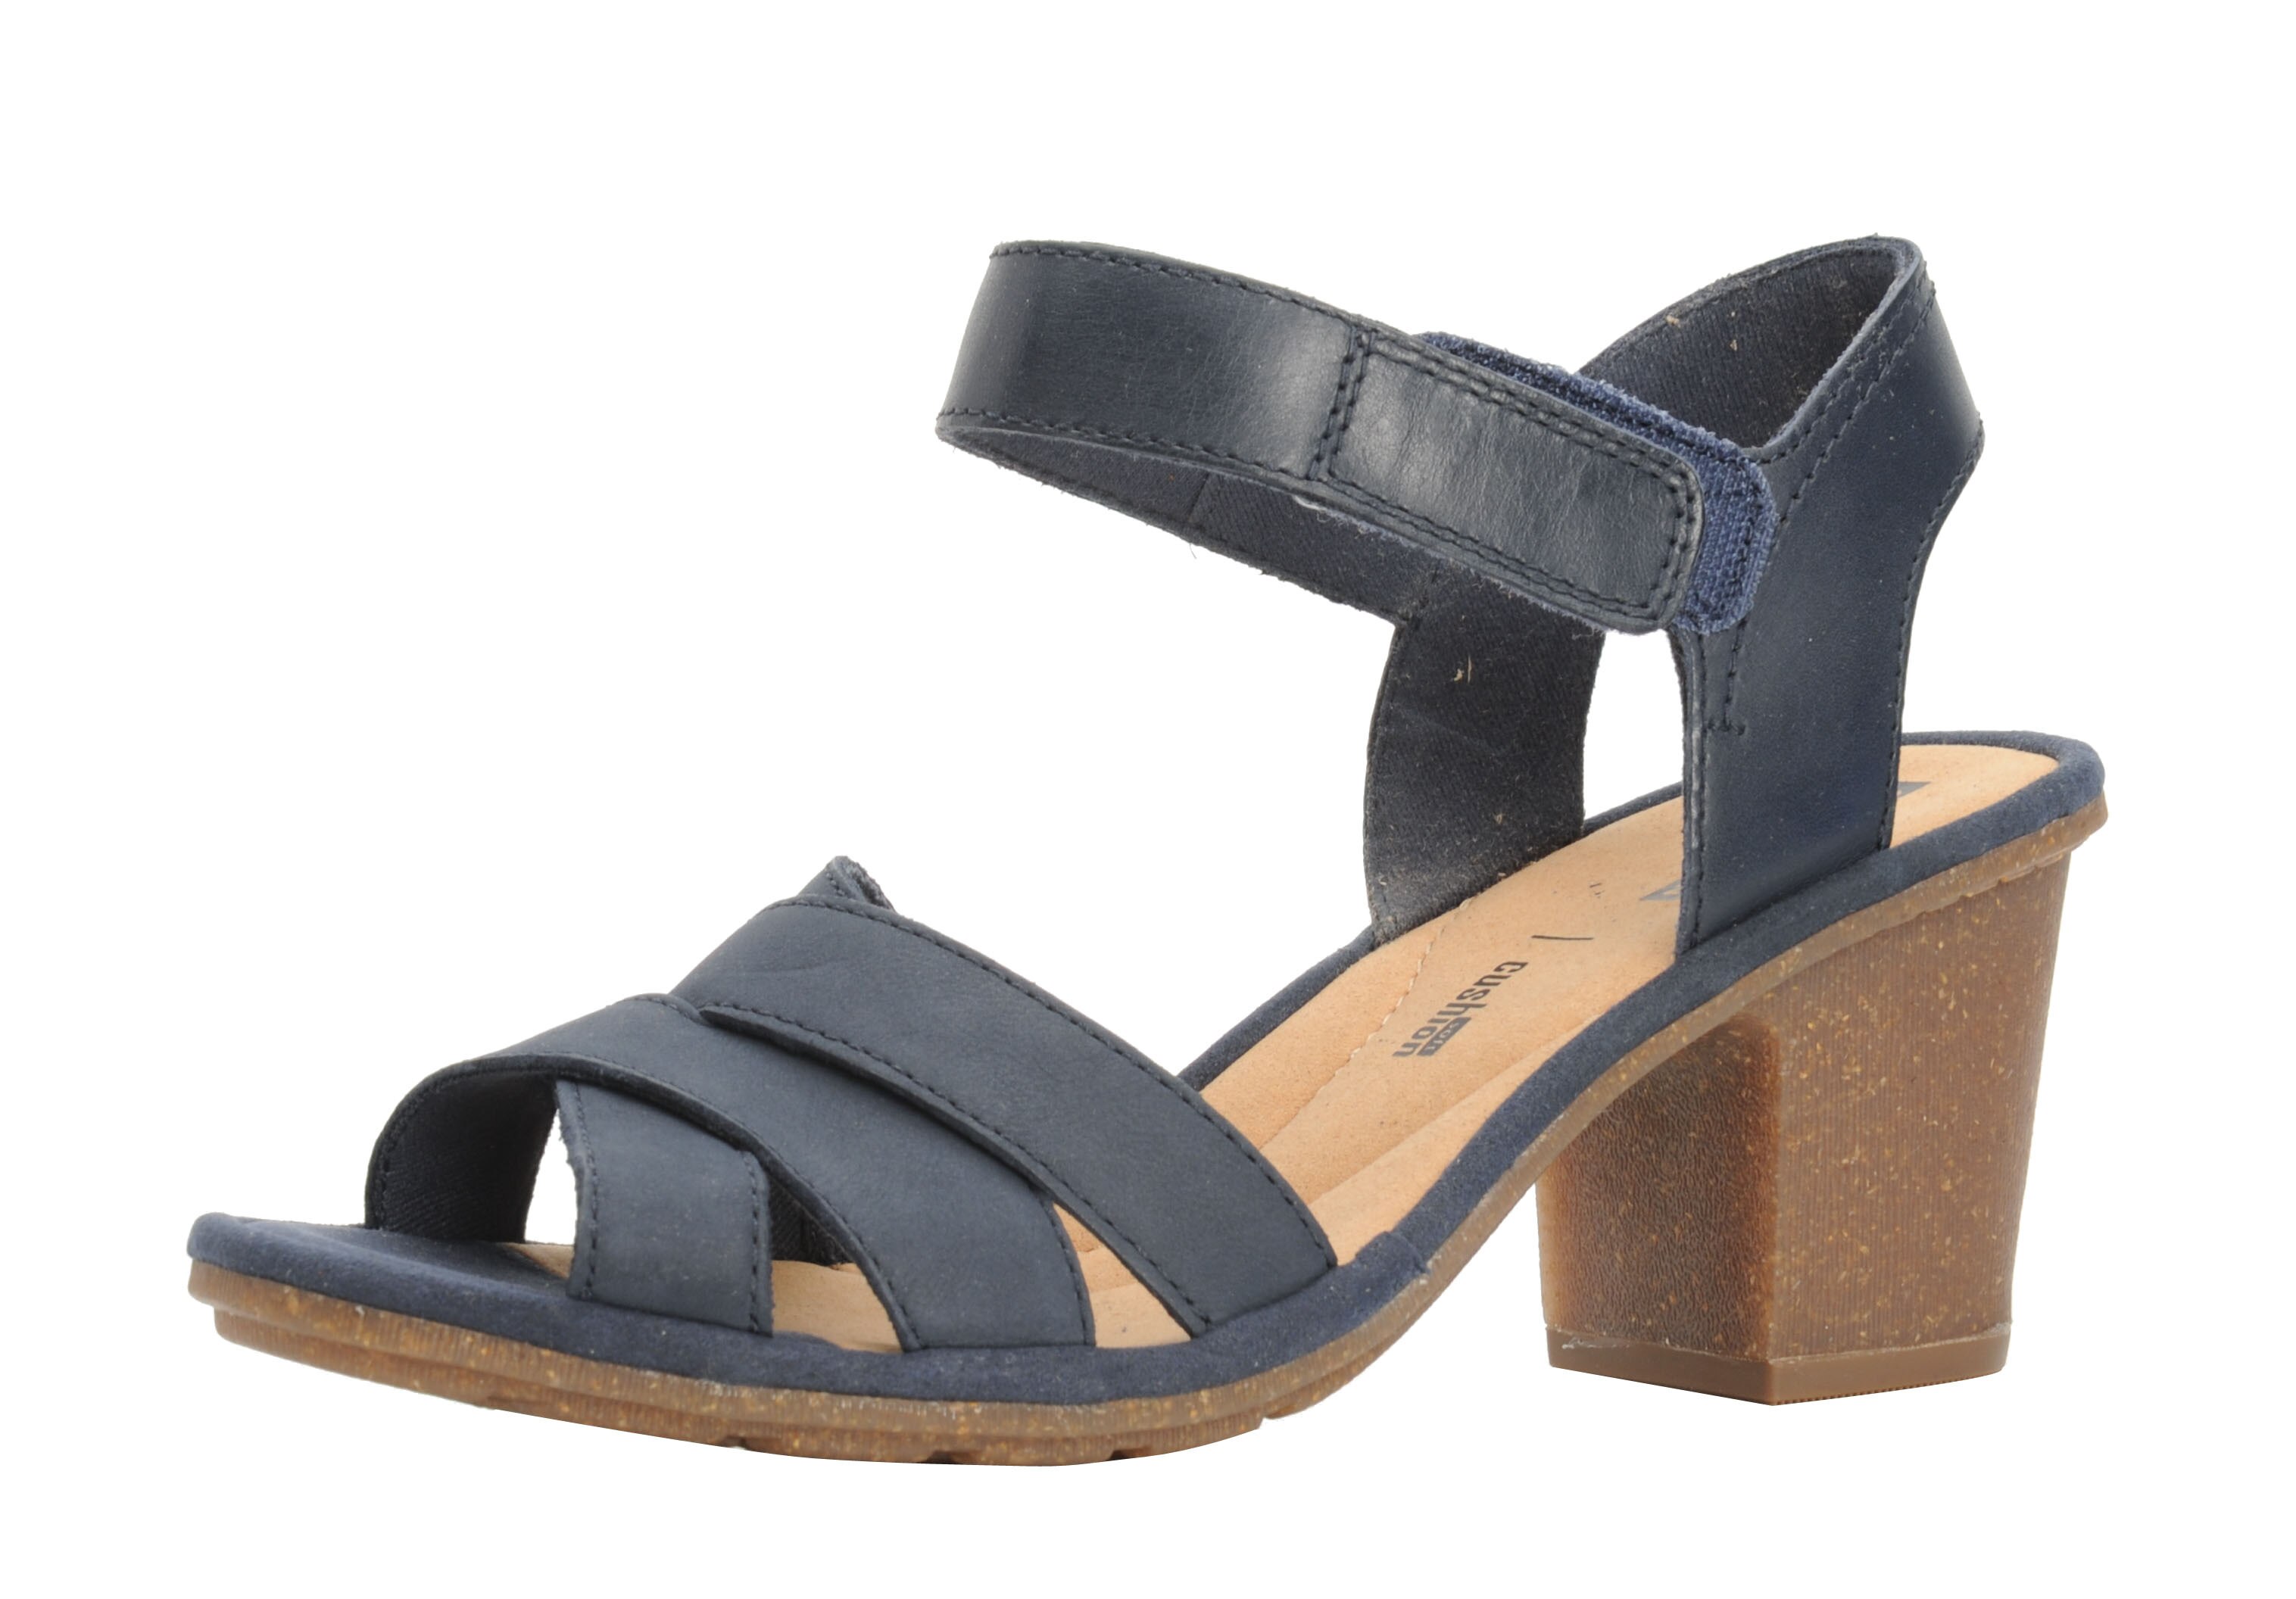 clarks women's sashlin jeneva heeled sandal